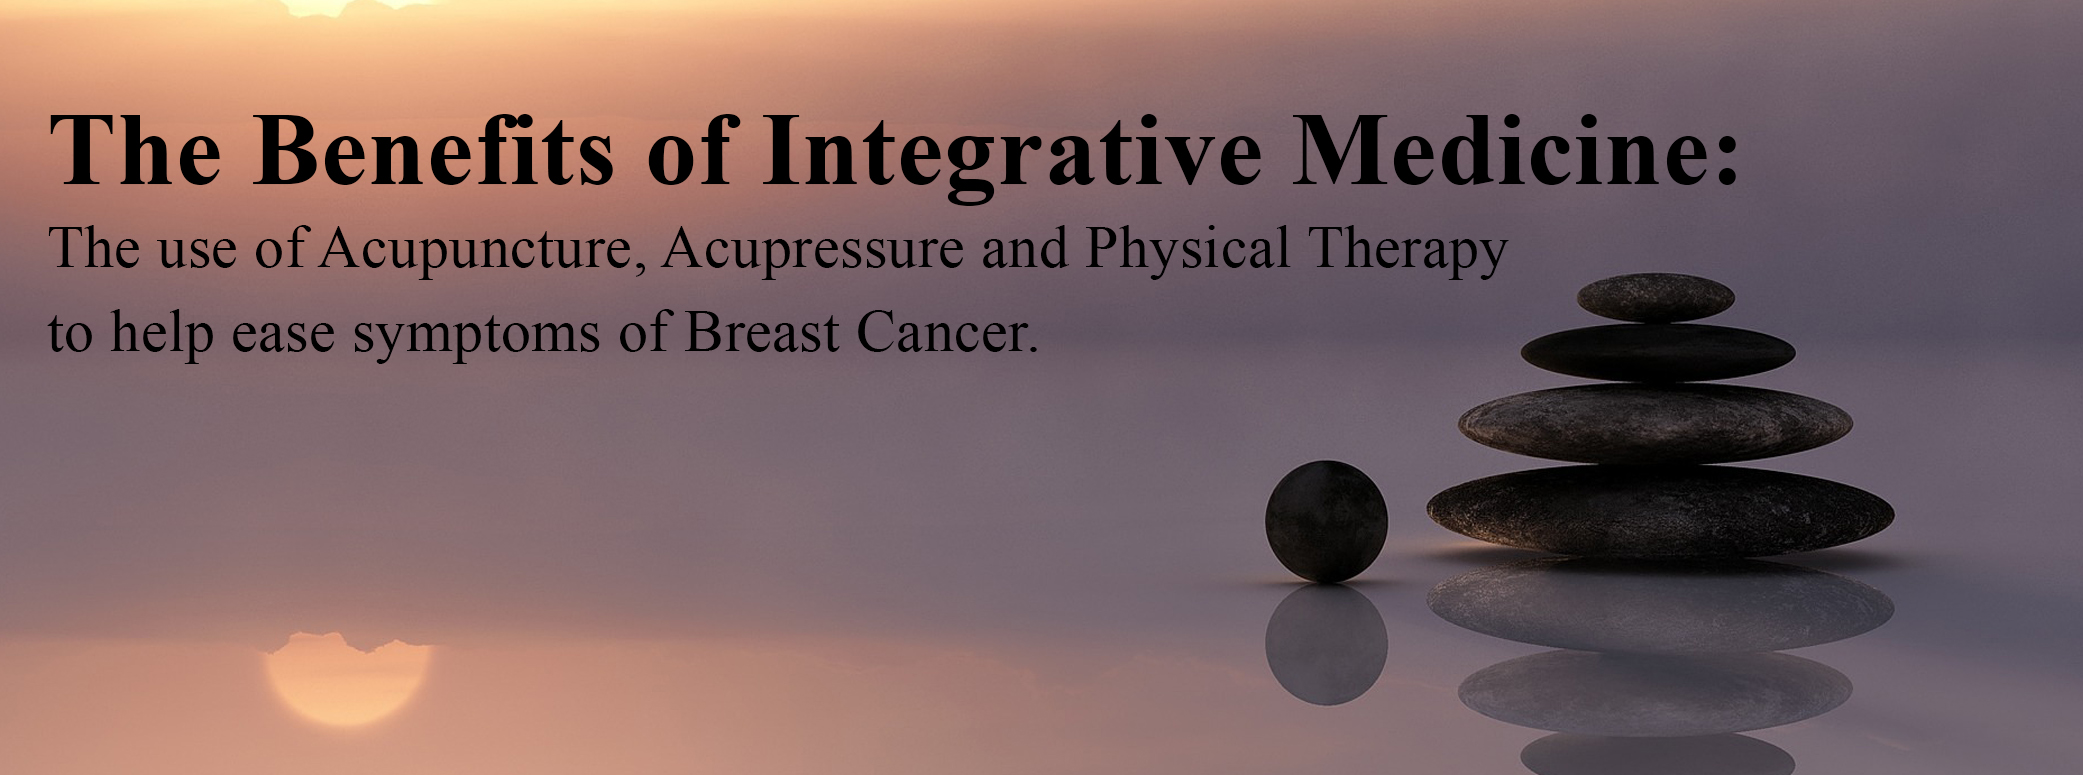 The benefits of Integrative Medicine copy